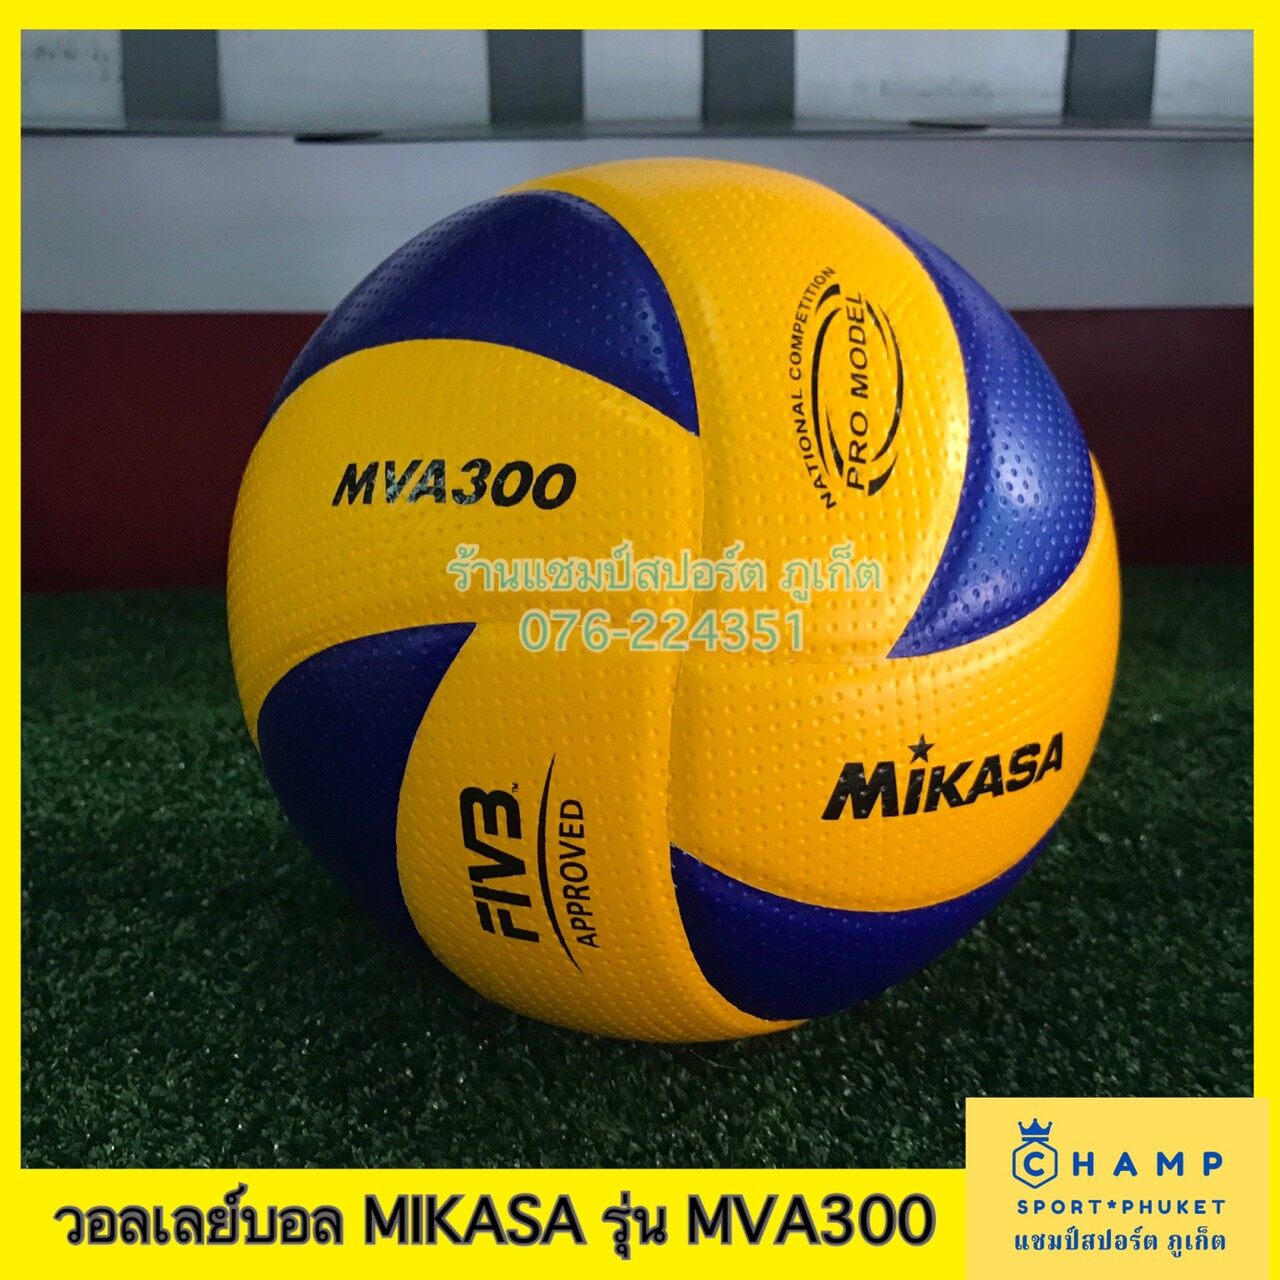 MIKASA ลูกวอลเลย์บอล MVA300 ลิขสิทธ์แท้!! MIKASA Volleyball